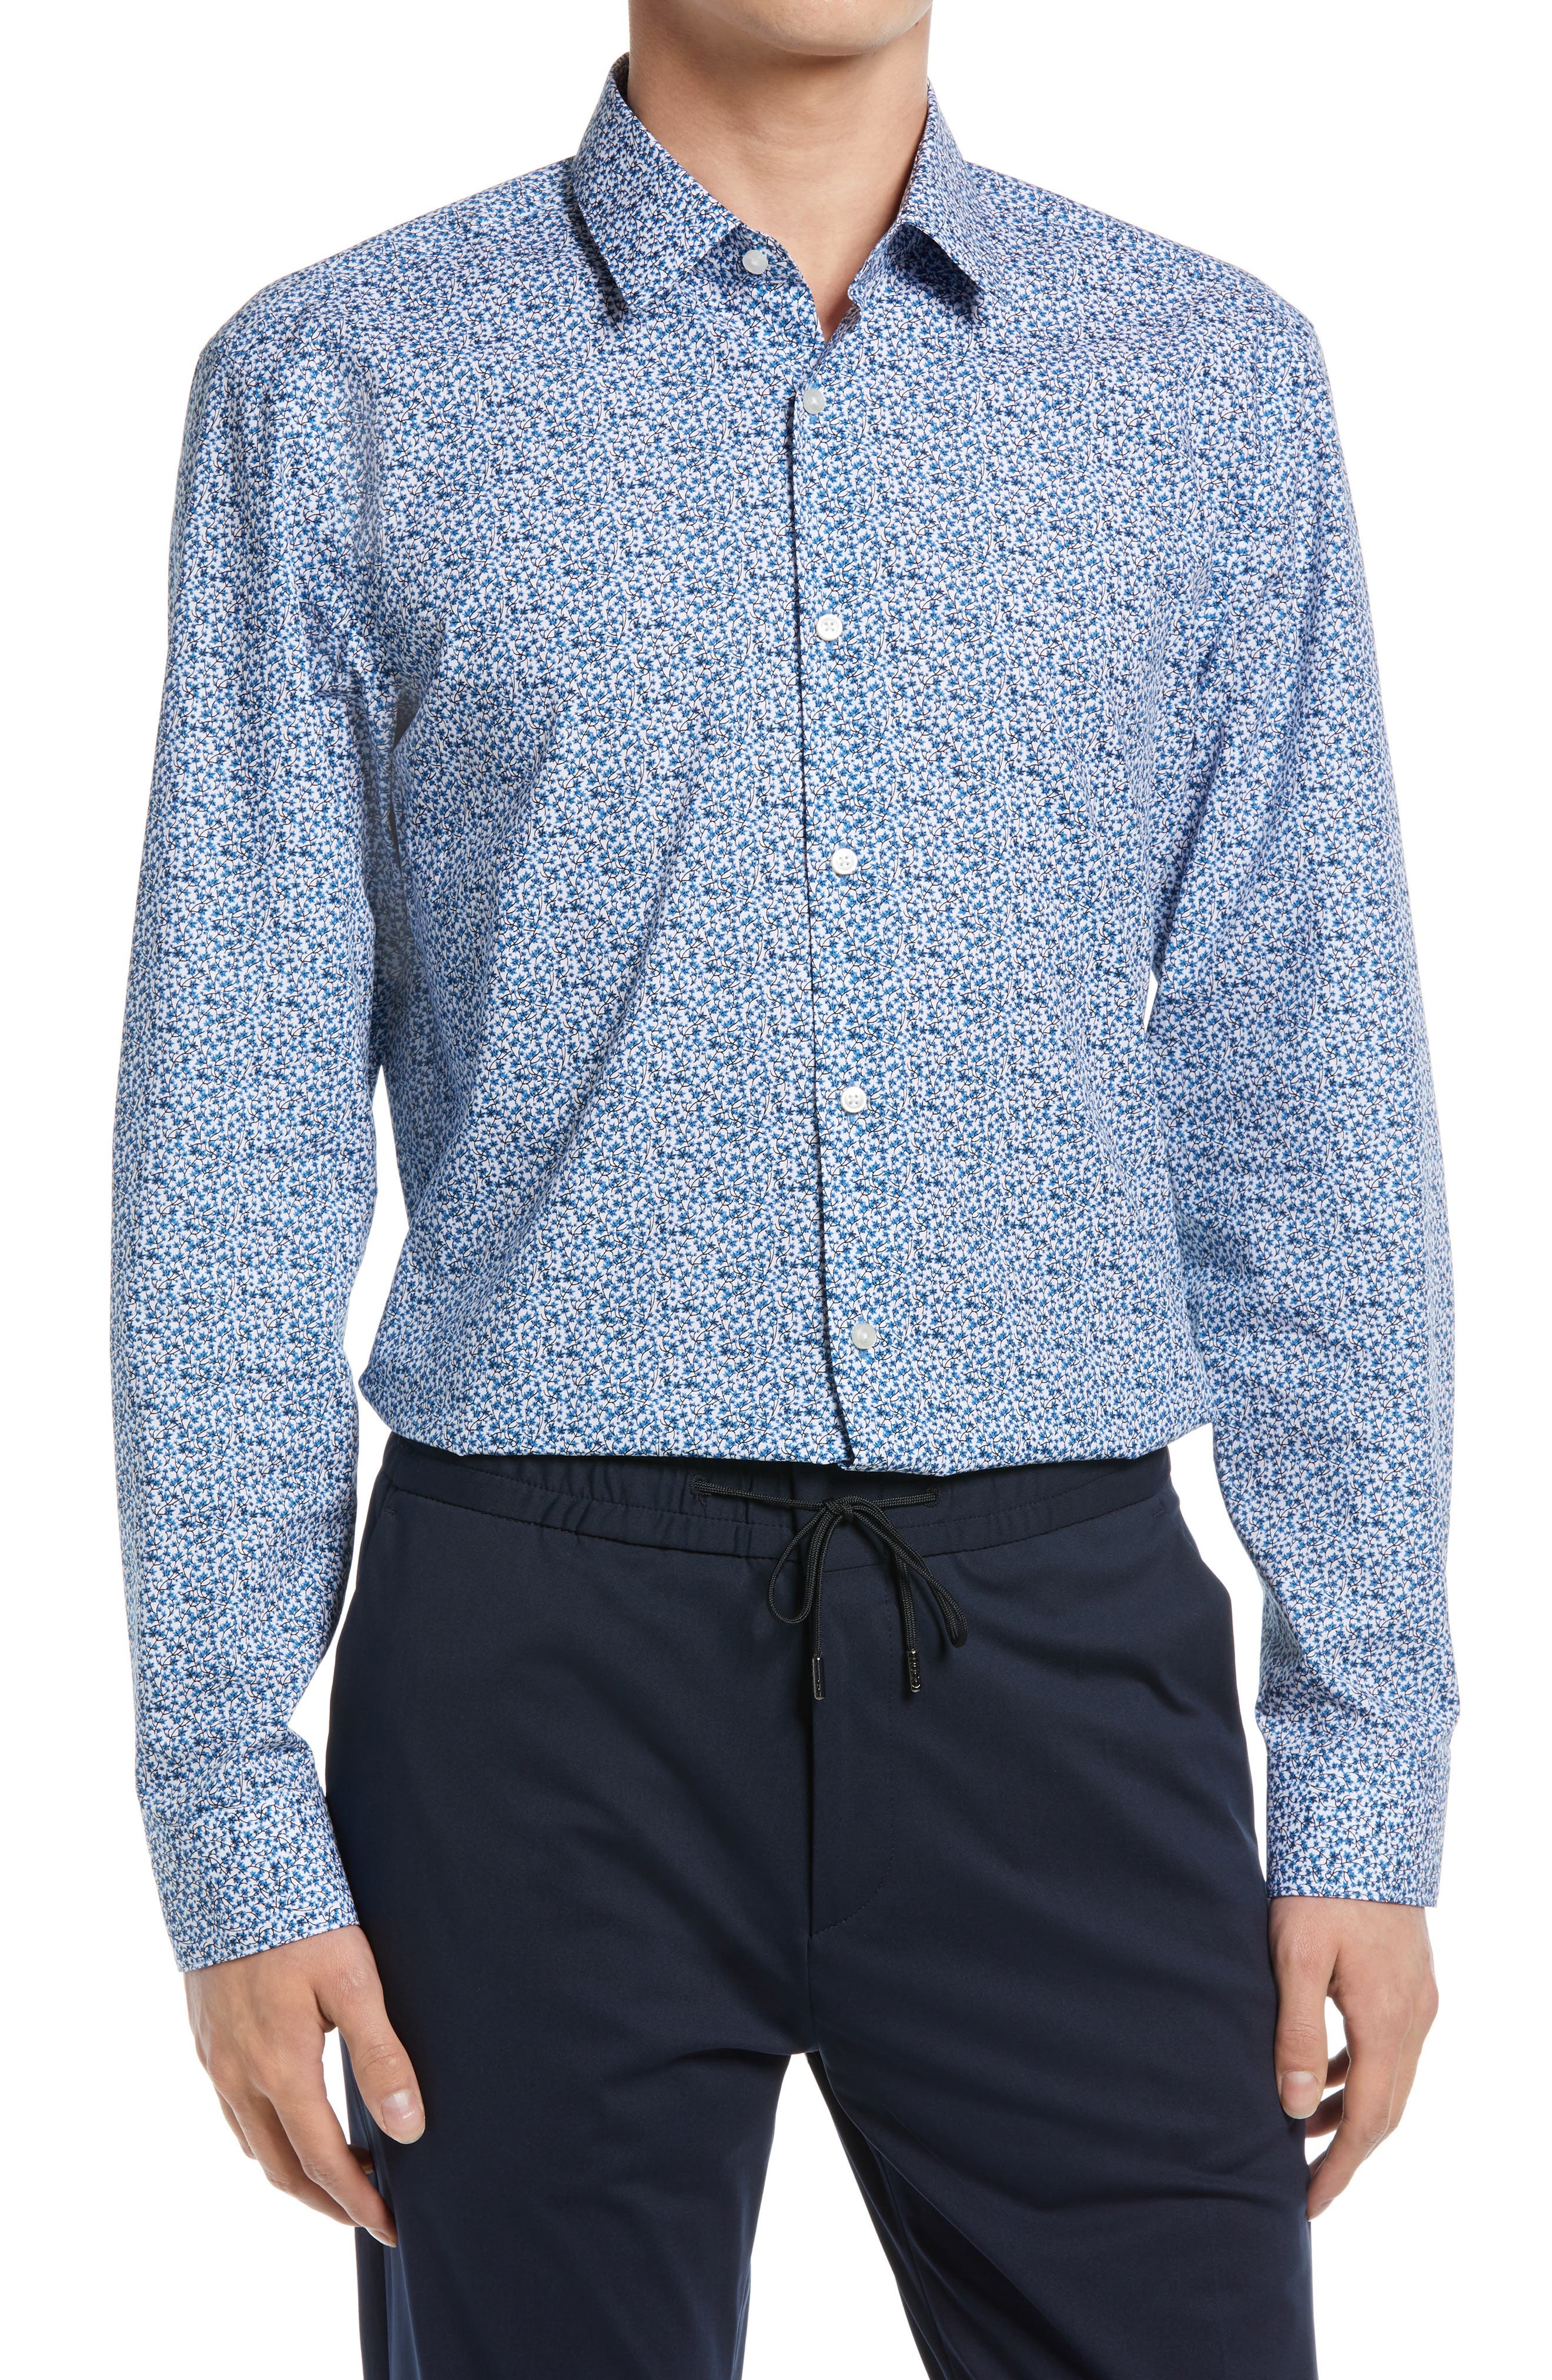 HUGO Isko Slim Fit Button-Up Dress Shirt in Medium Blue at Nordstrom, Size 15